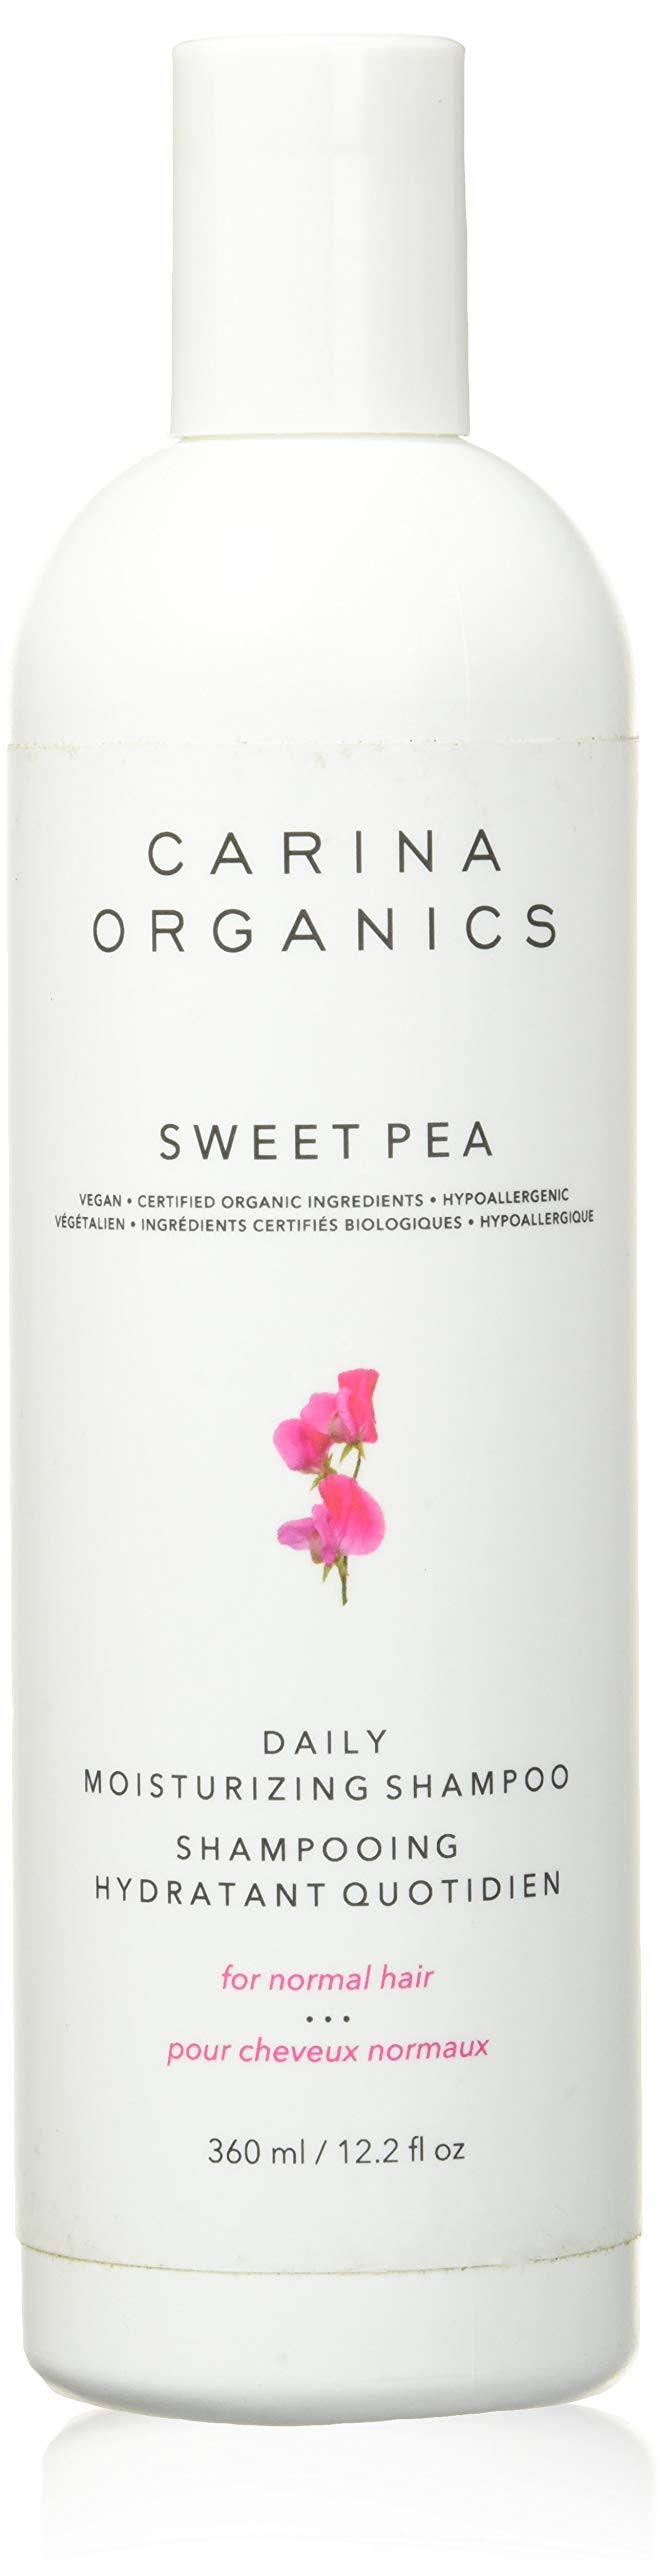 Carina Organics Sweet Pea Shampoo (Daily)